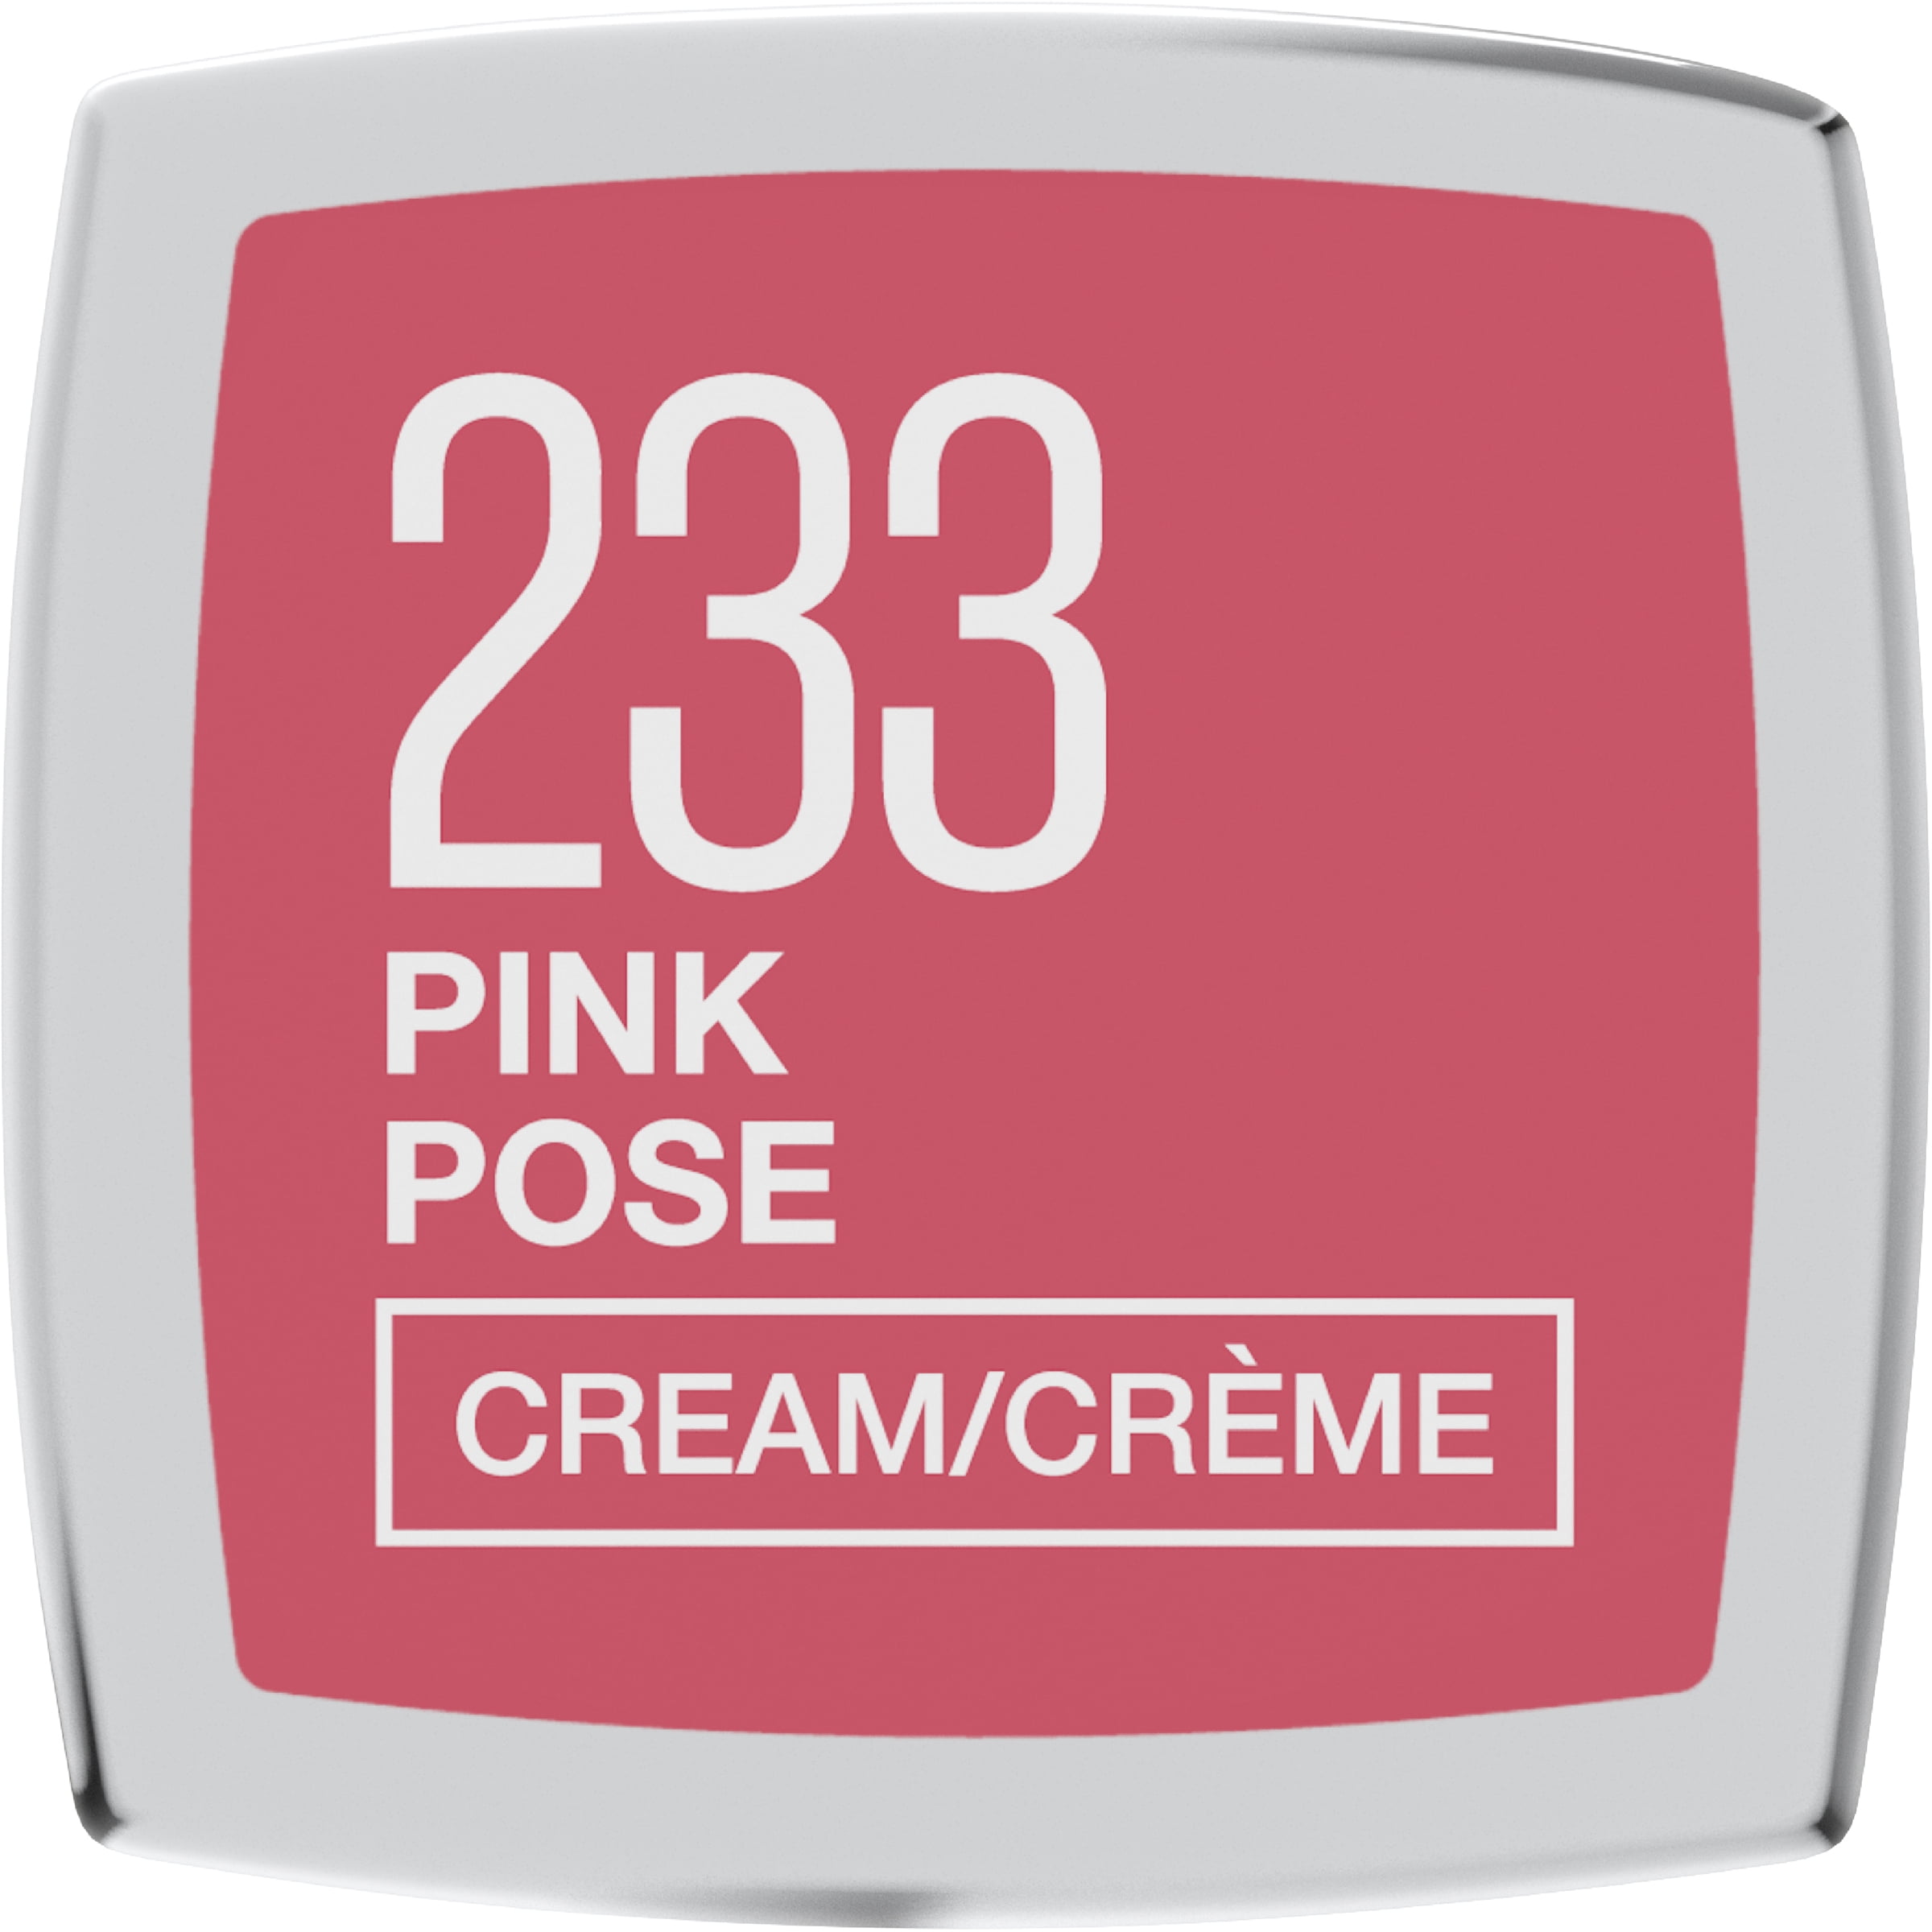 Color Pink Cream Lipstick, Pose Maybelline Sensational Finish